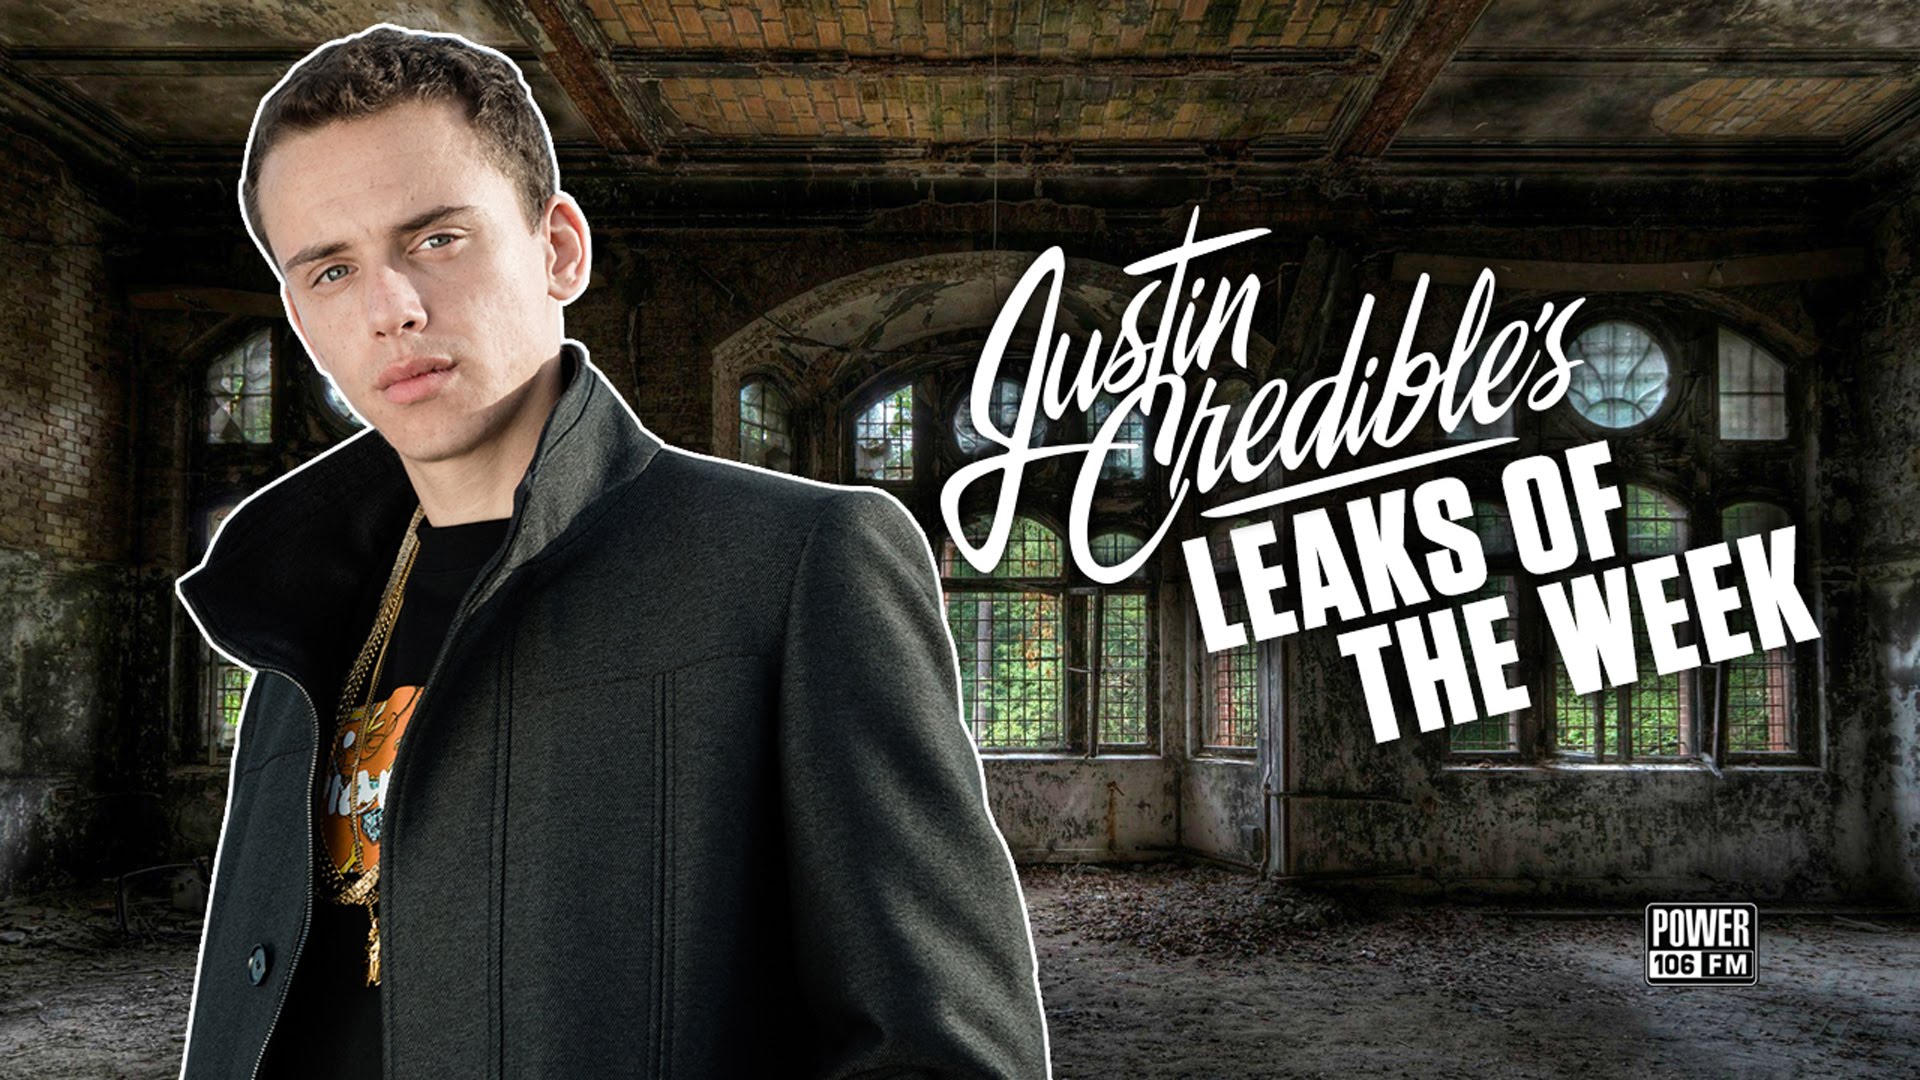 Justin Credible’s #LeaksOfTheWeek w/ Logic, TY Dolla $ign, & Wale (Video)